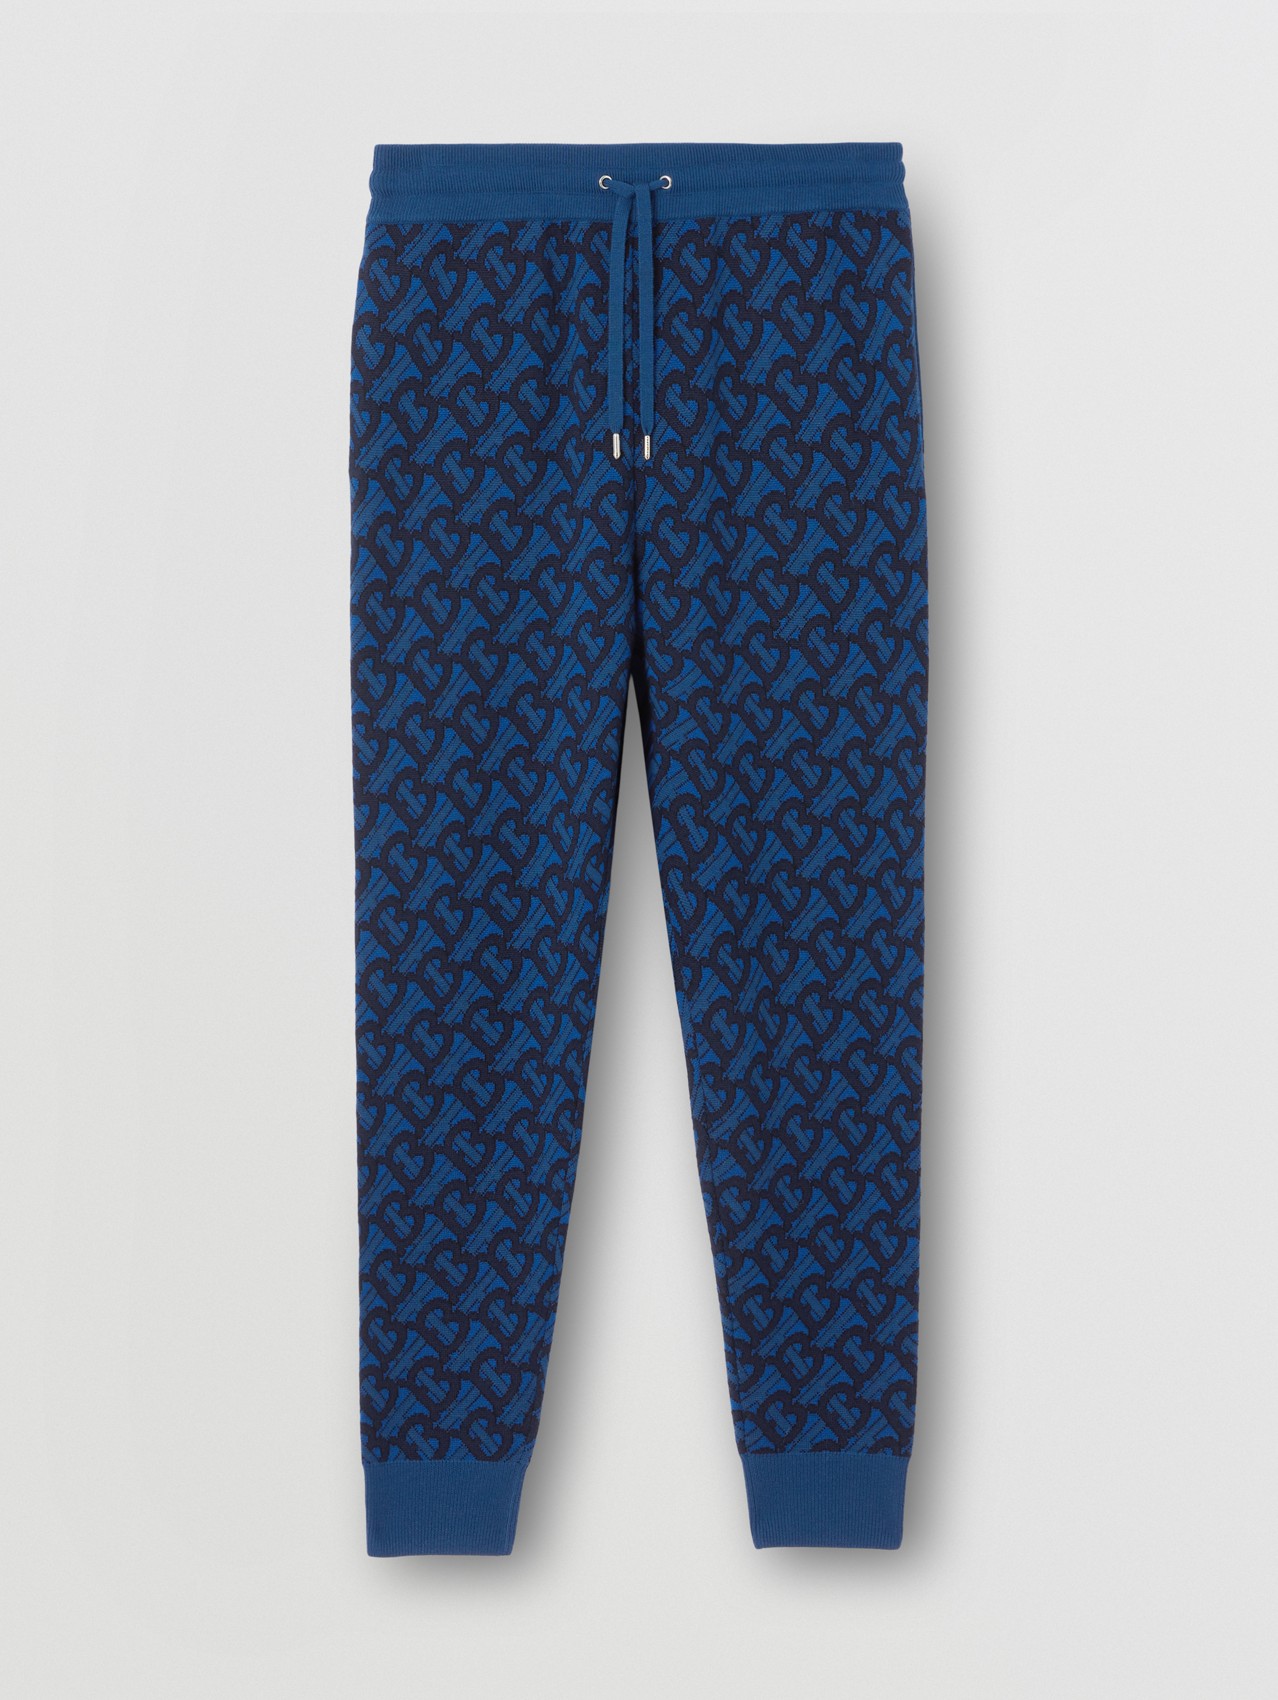 Pantalones de jogging en lana con monogramas en jacquard (Azul Real)